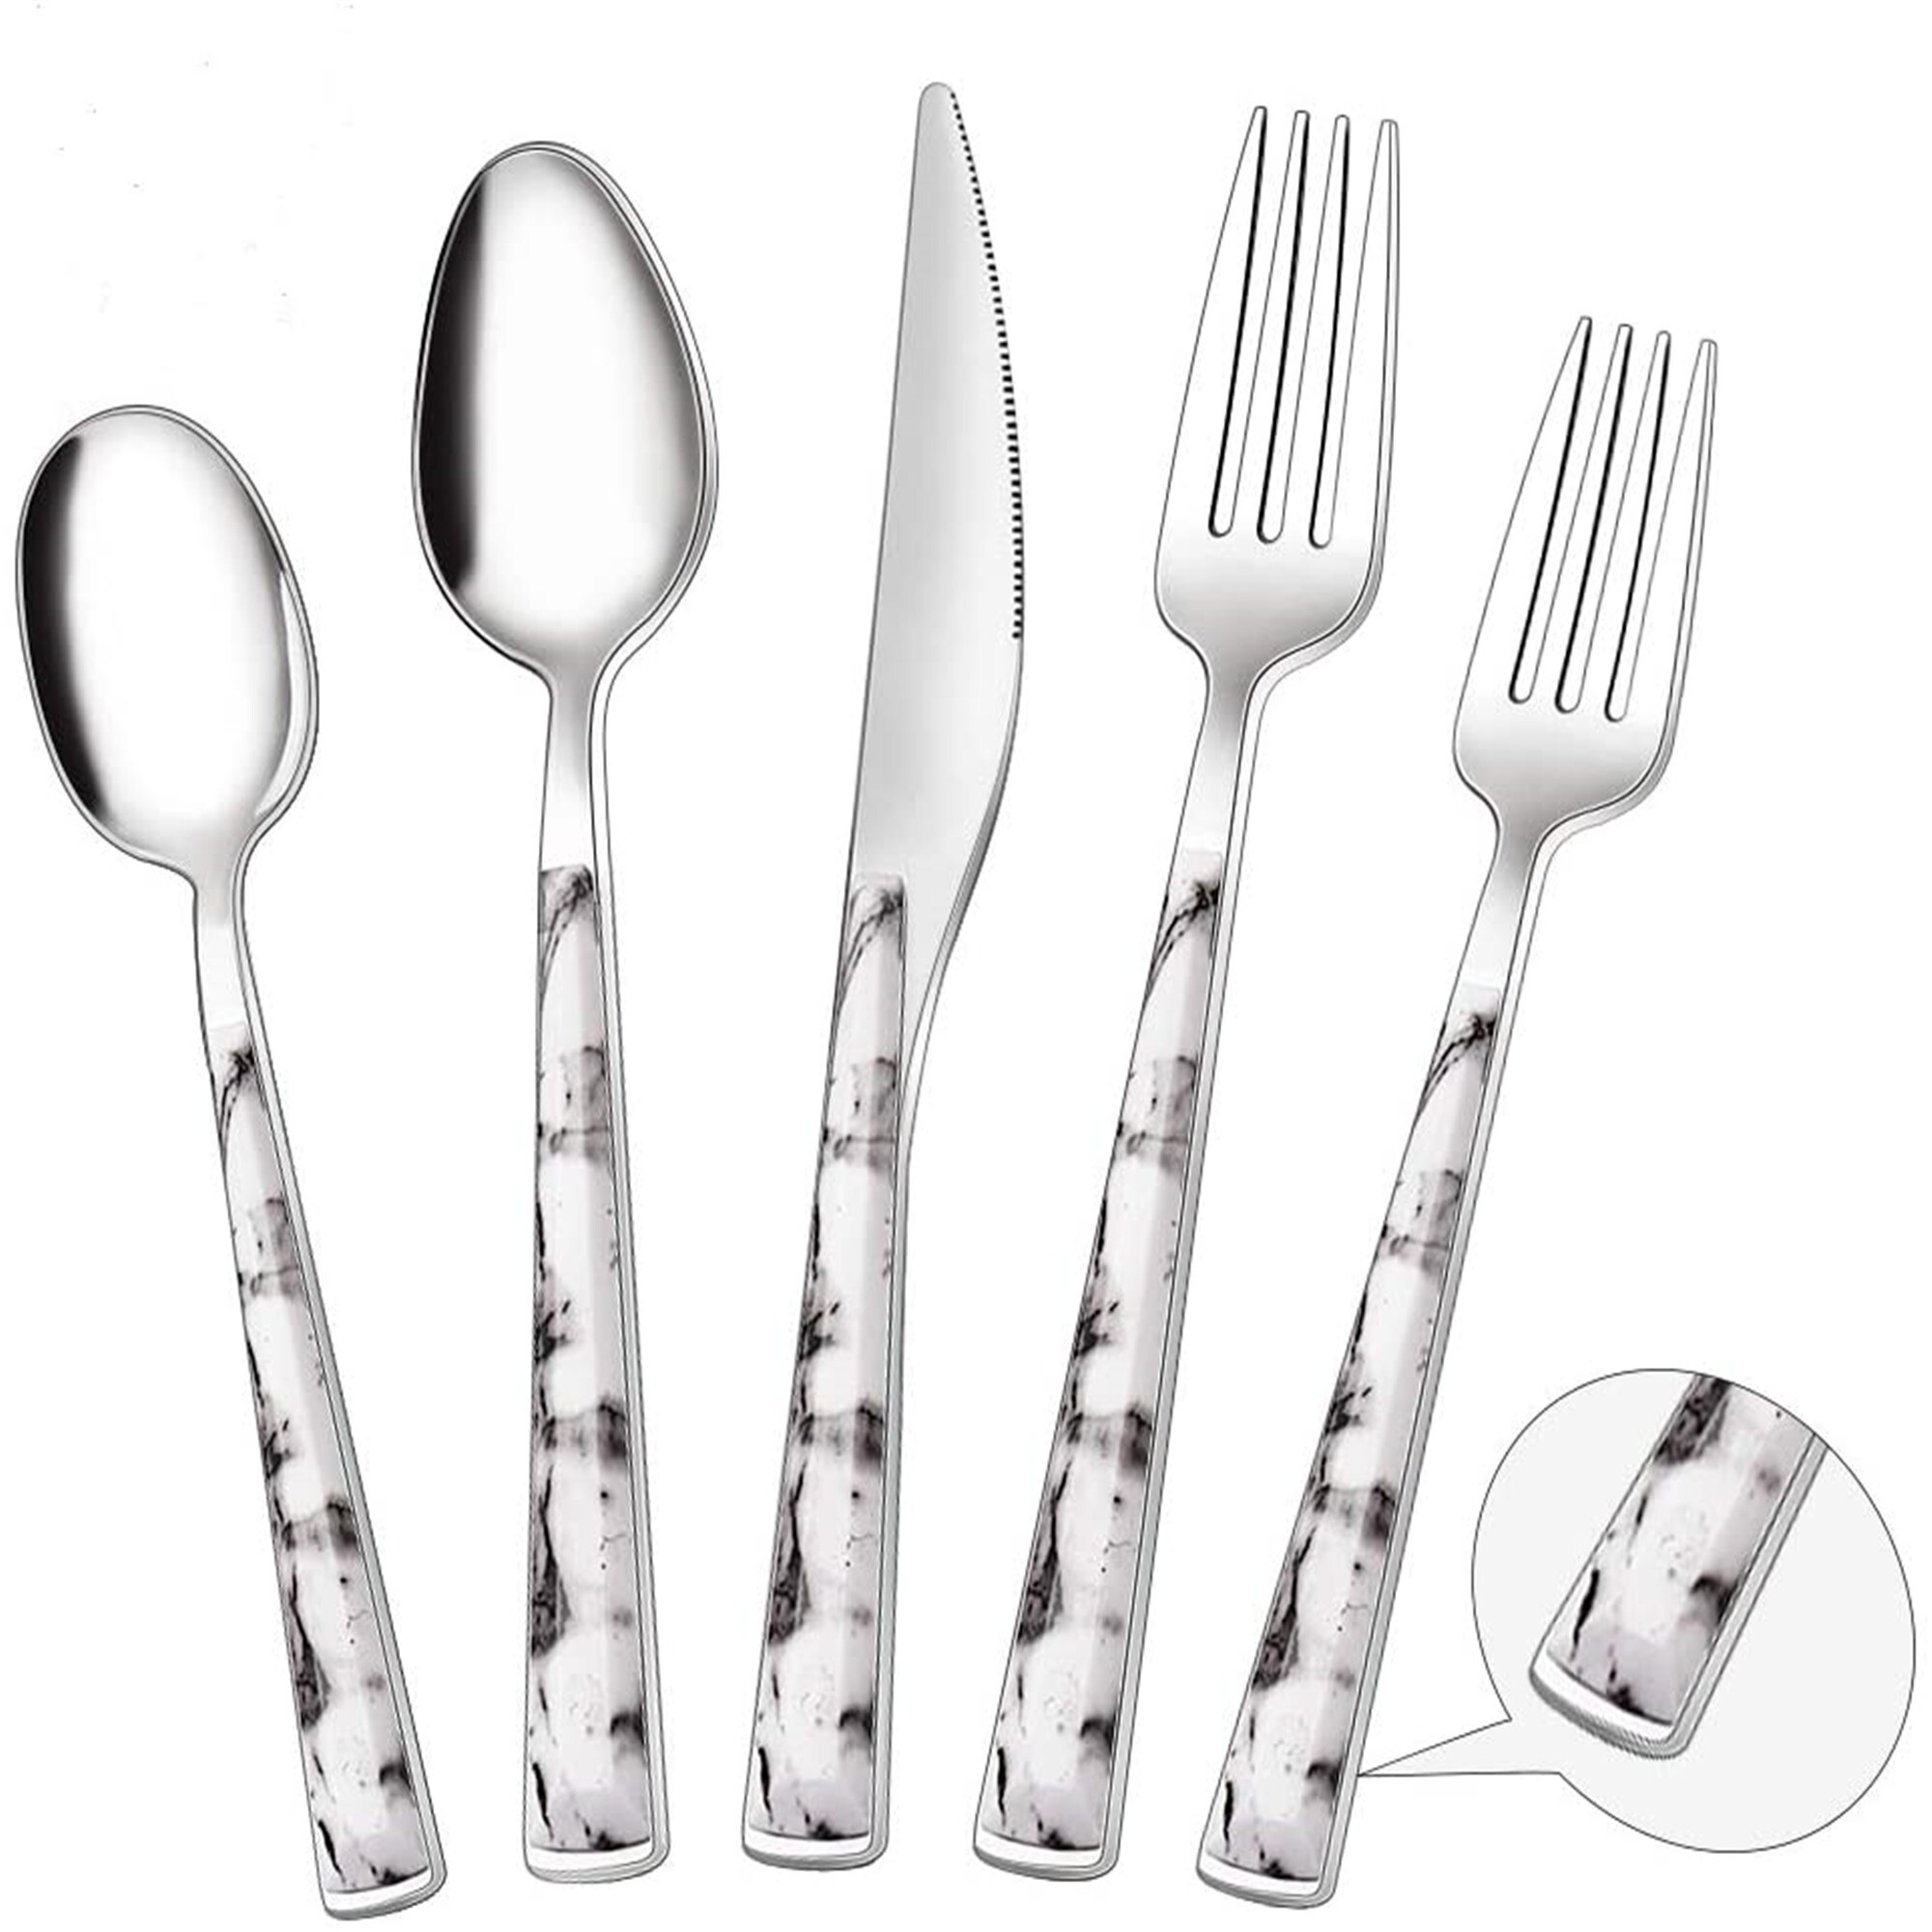 20 Piece Black Stainless Steel Silverware Flatware Set Cutlery Service for 4 